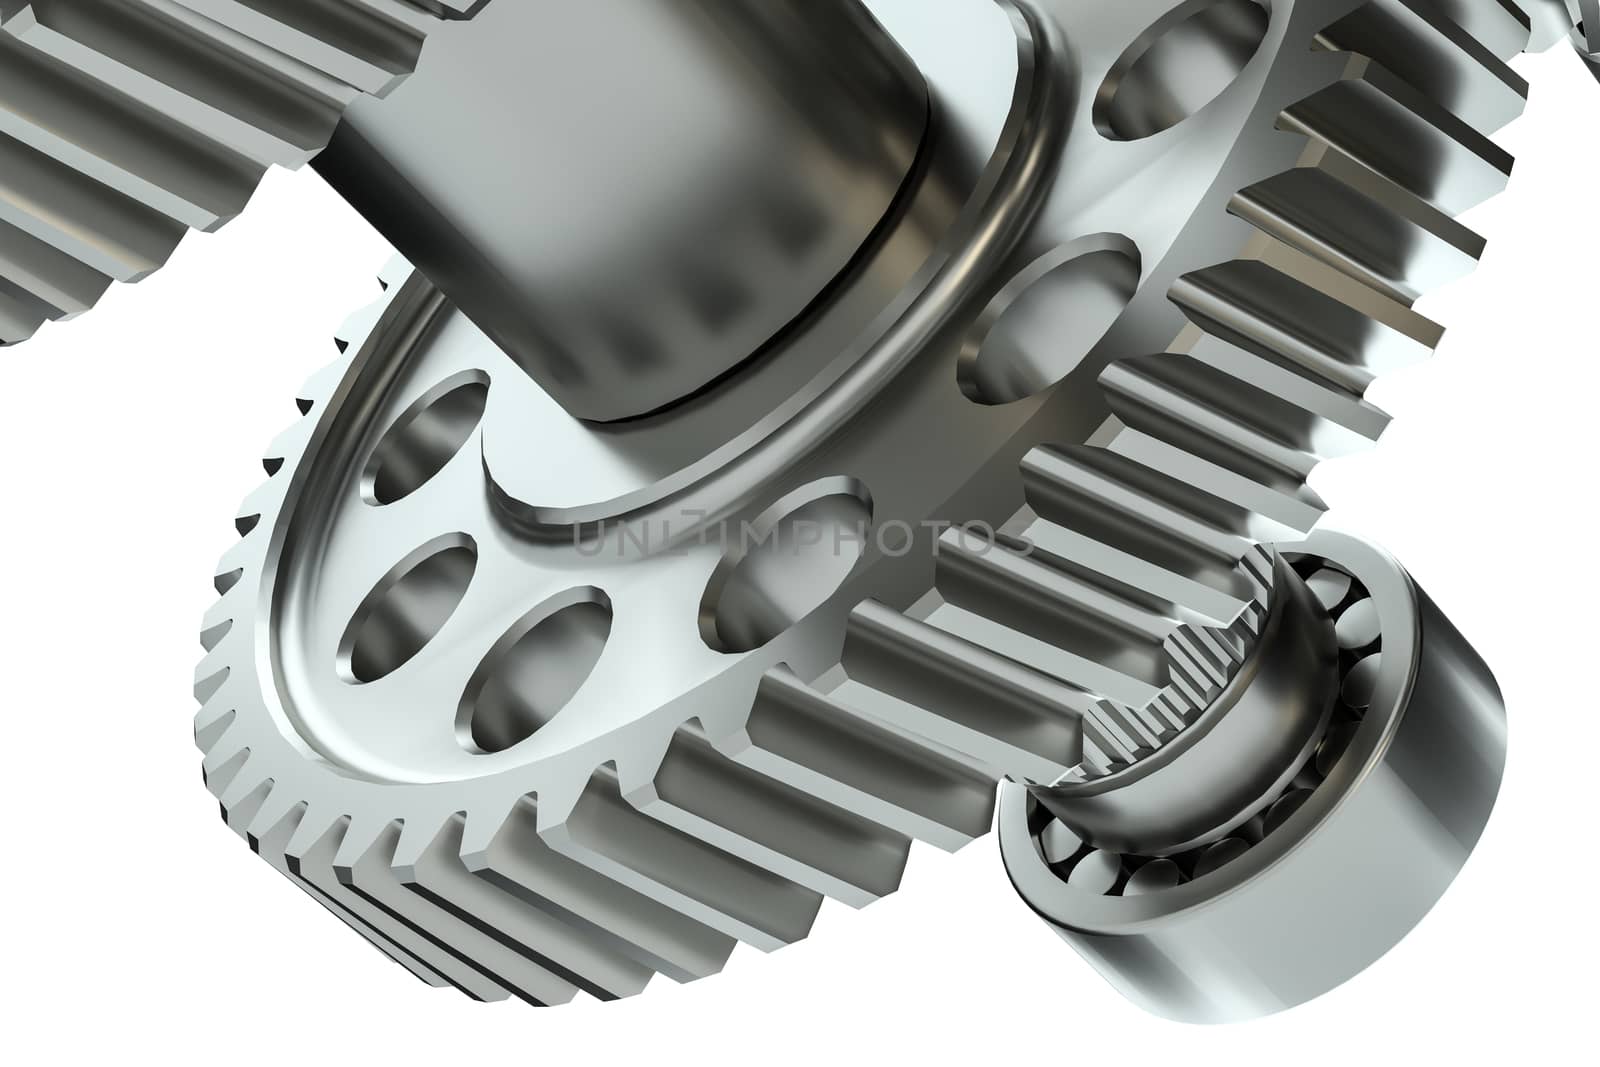 Engine gears wheels, closeup view by cherezoff